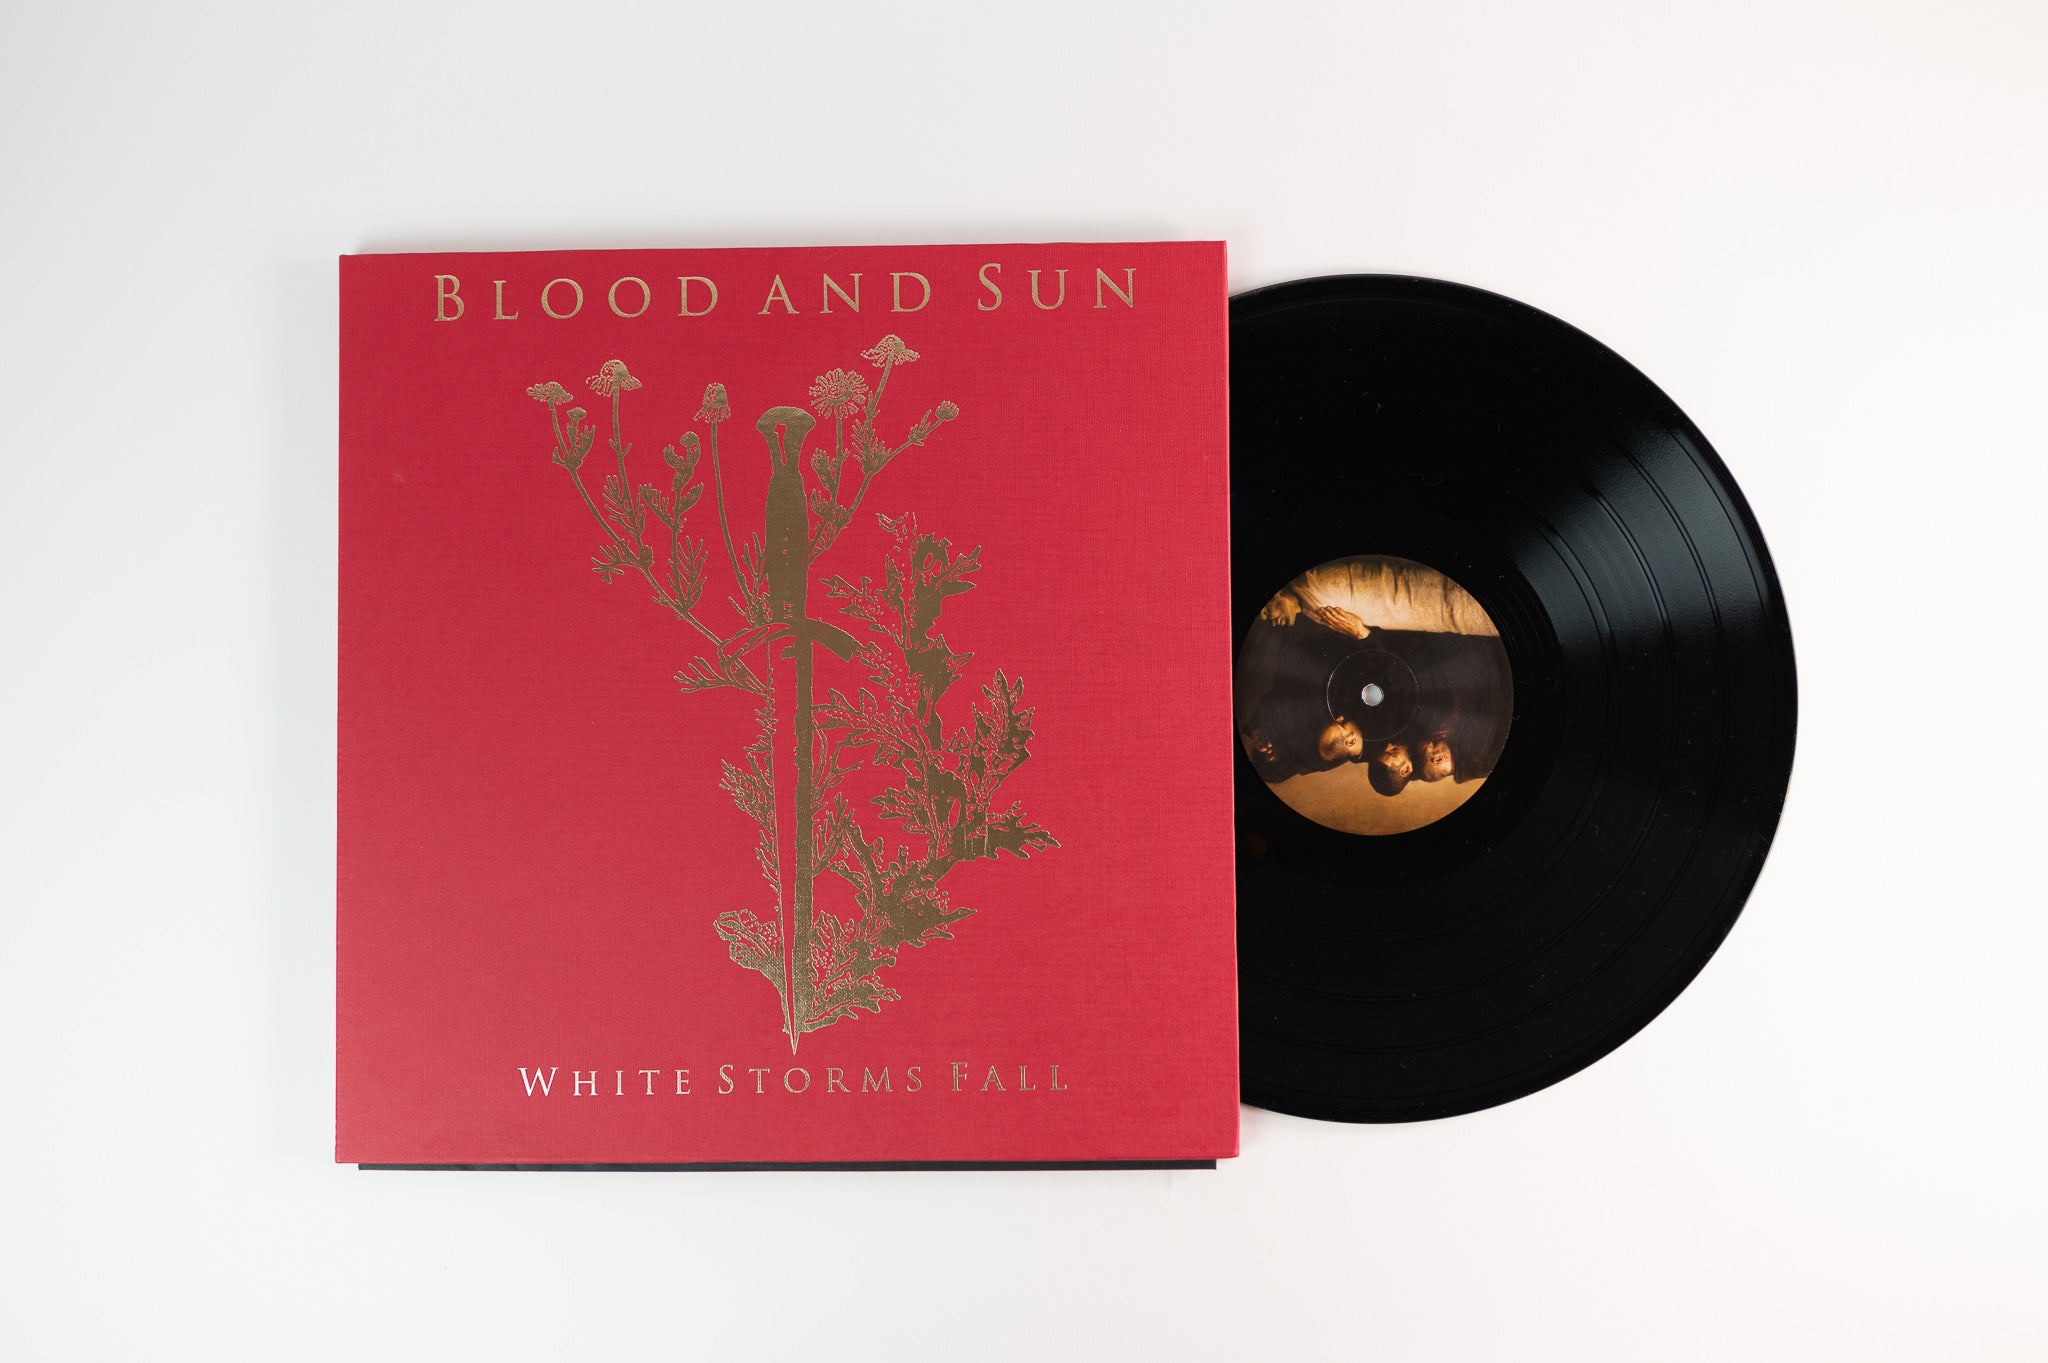 Blood And Sun - White Storms Fall on Pesenata LP with Bonus CD